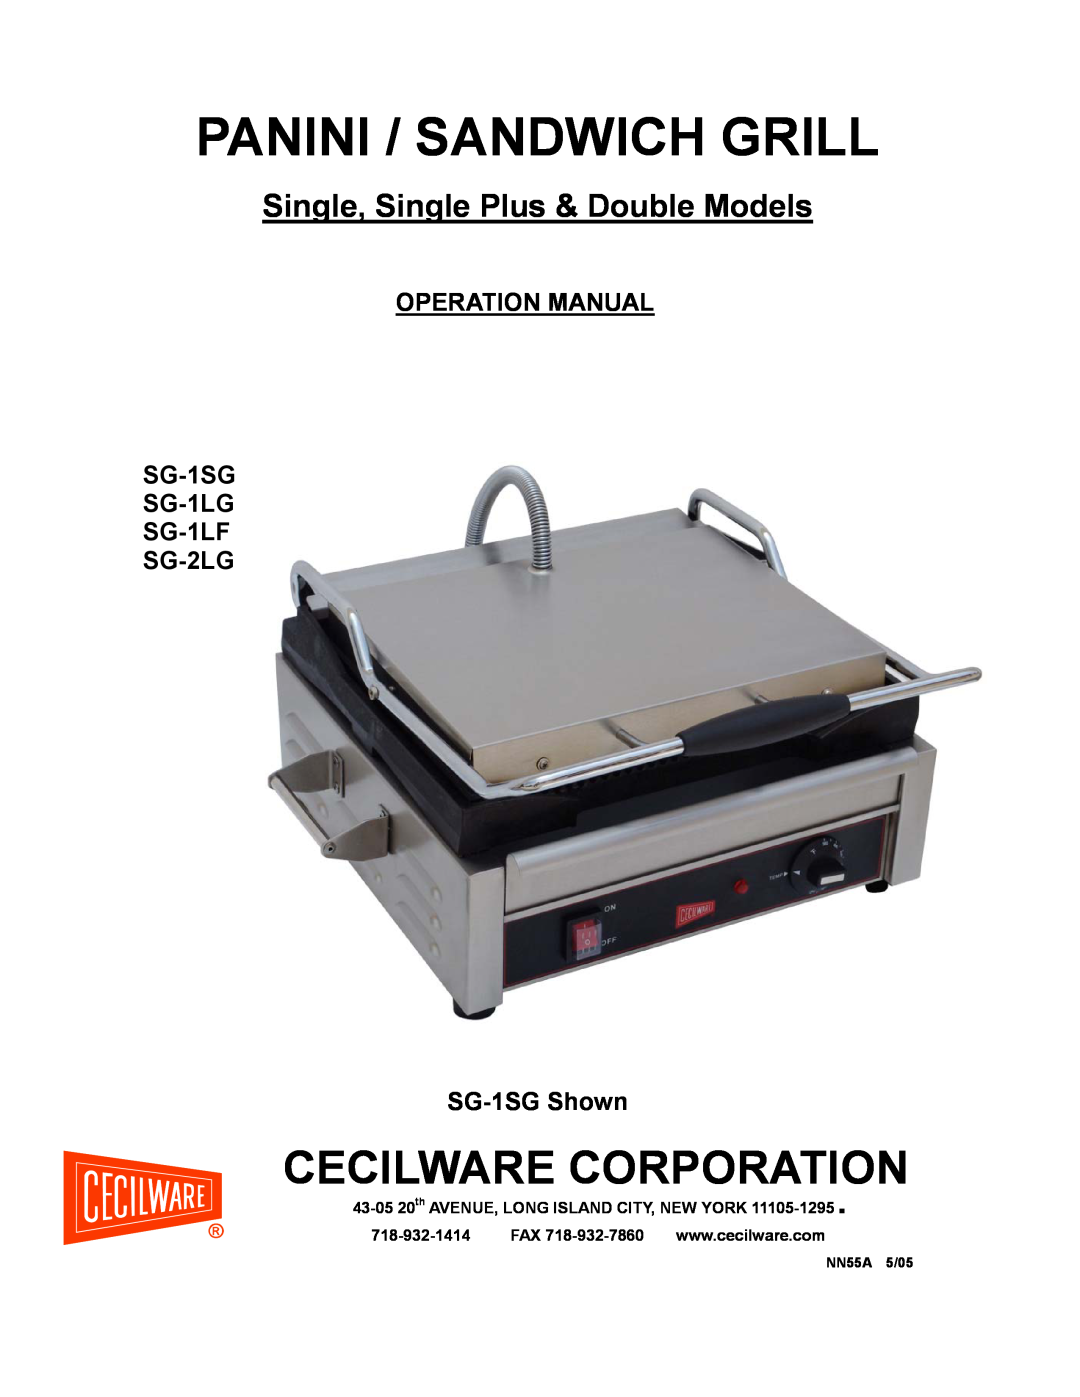 Cecilware SG-1SG operation manual Cecilware Corporation, Panini / Sandwich Grill, Single, Single Plus & Double Models 